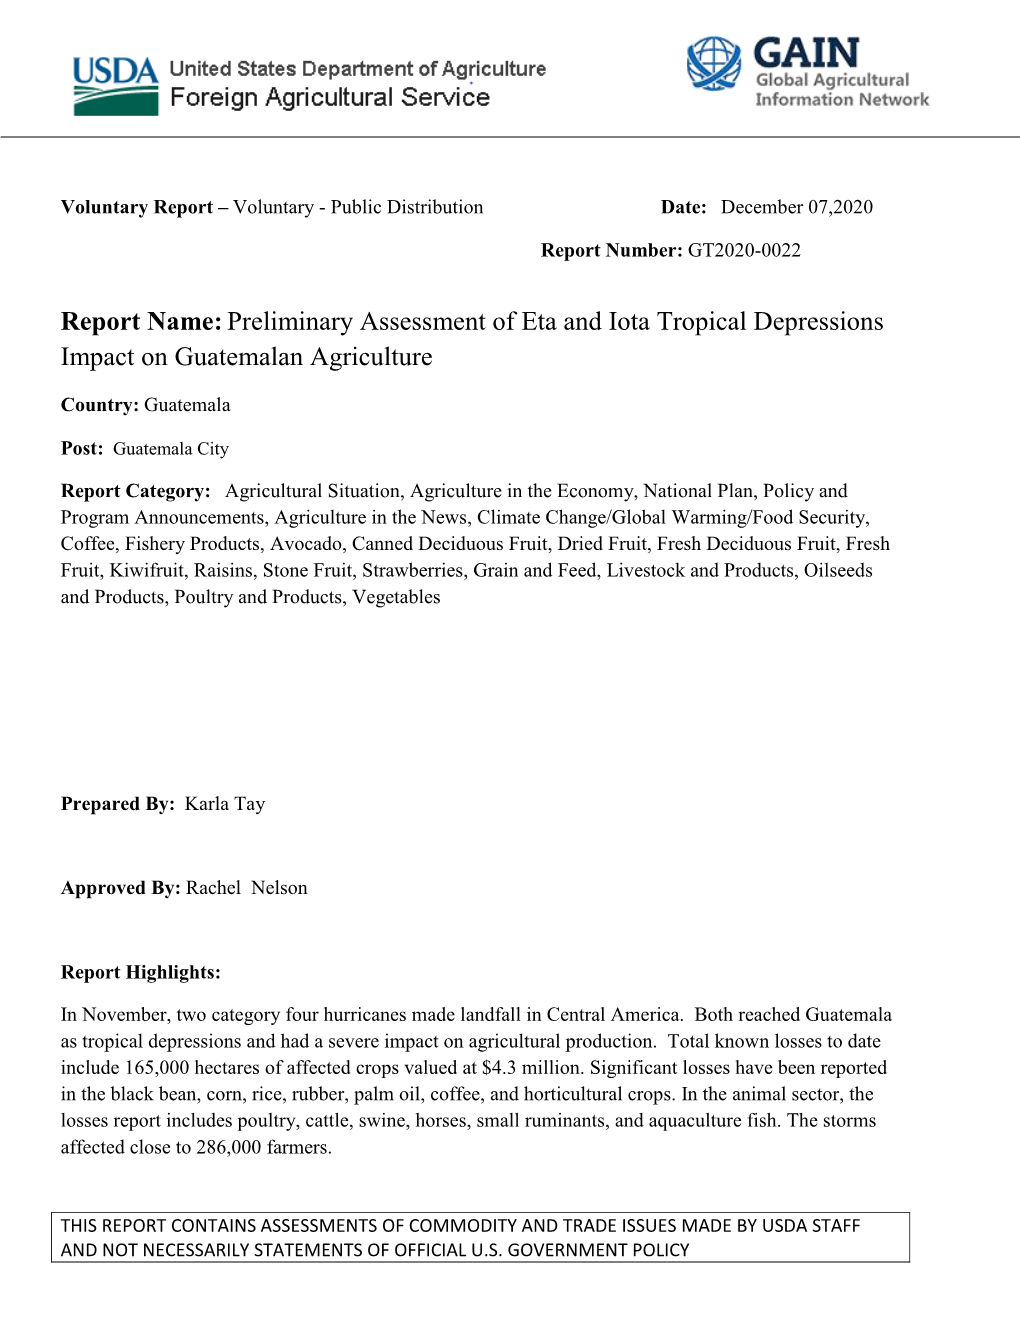 Report Name:Preliminary Assessment of Eta and Iota Tropical